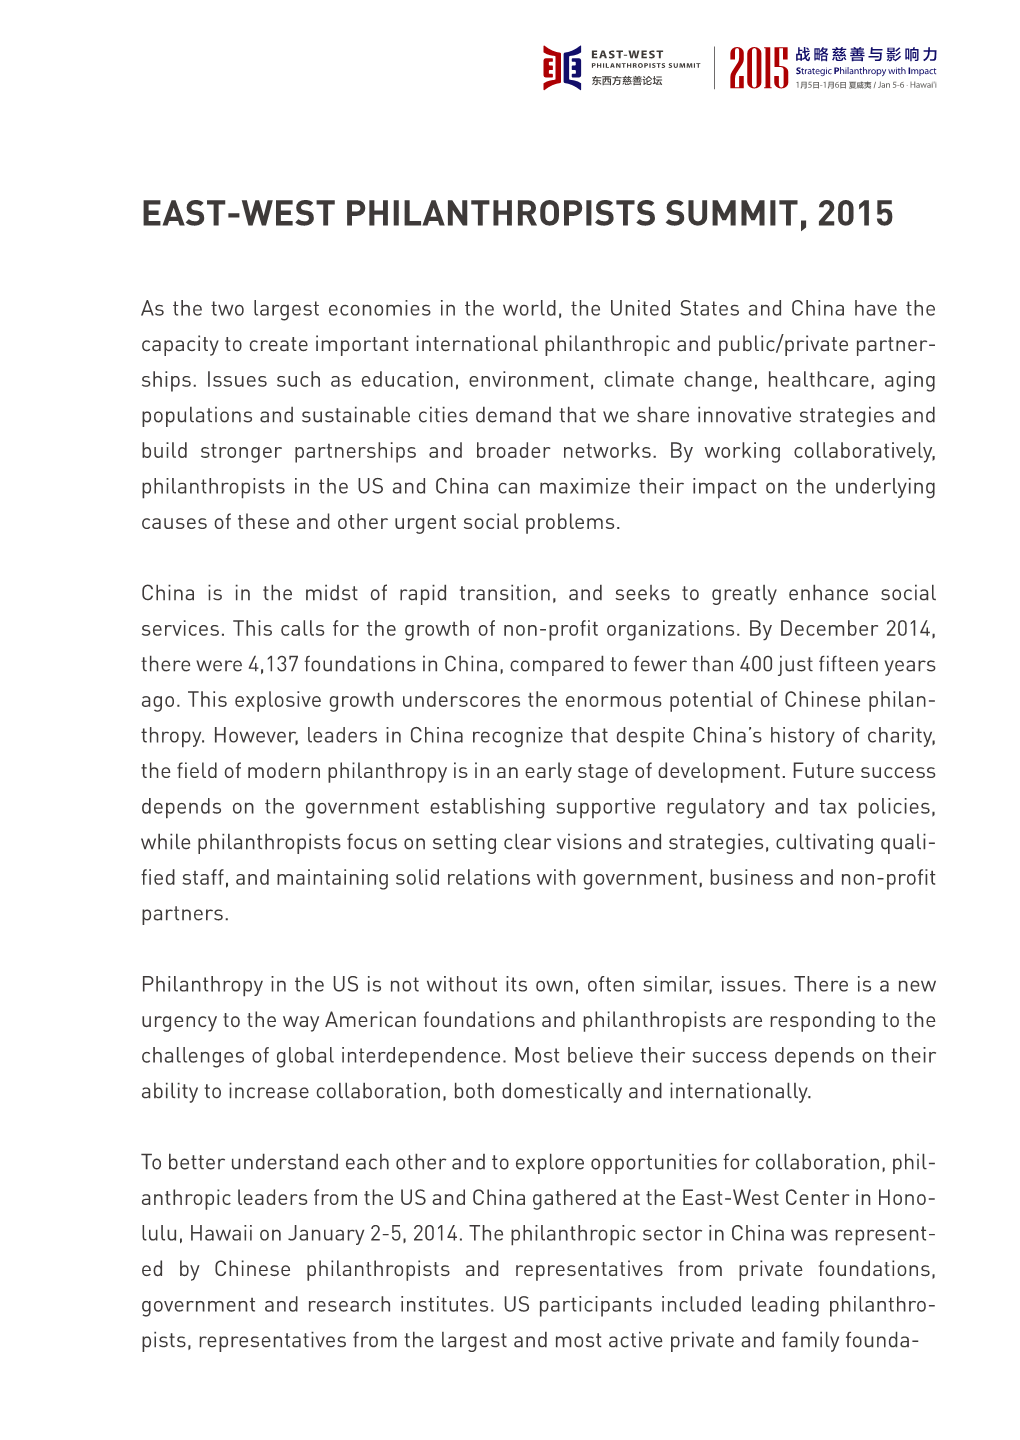 East-West Philanthropists Summit, 2015